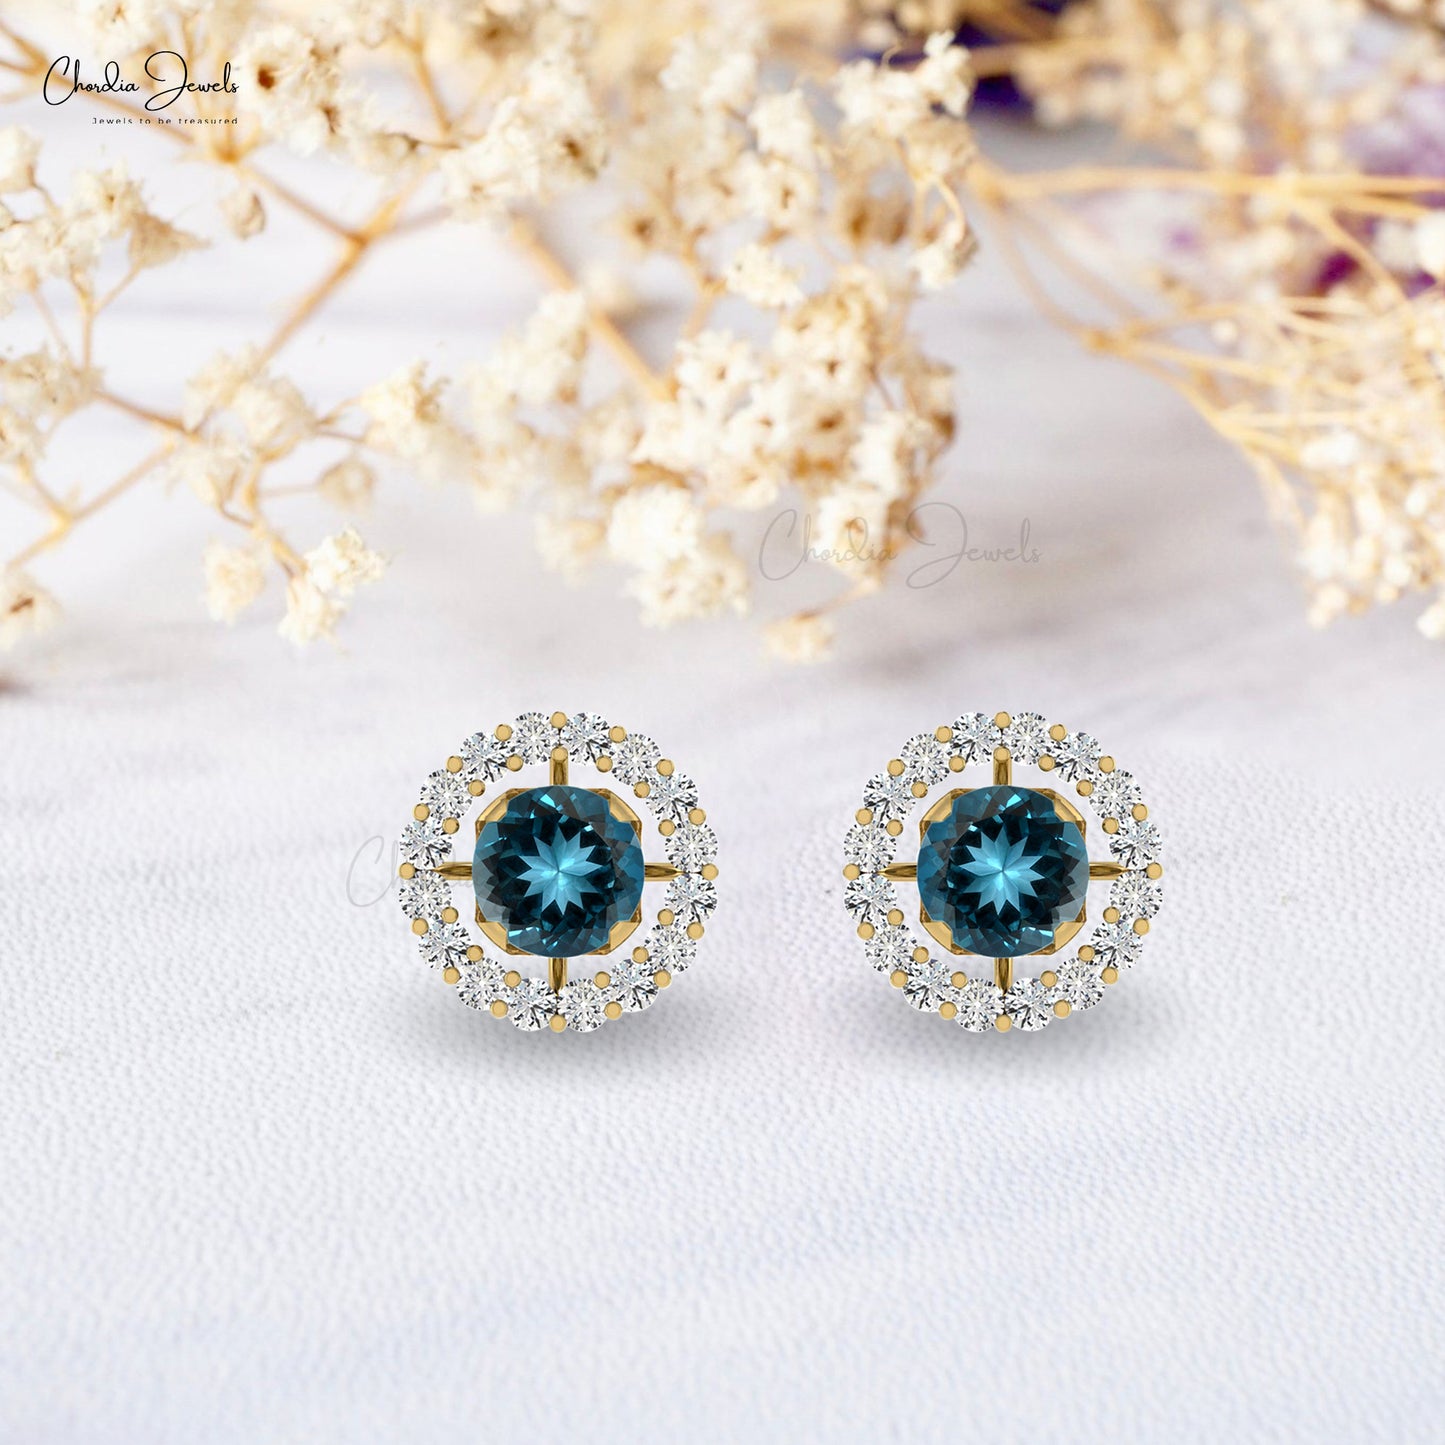 Elegant London Blue Topaz Studs 14k Real Gold Diamond Detachable Earrings 4mm Round Cut Natural Gemstone Birthday Gift Earrings